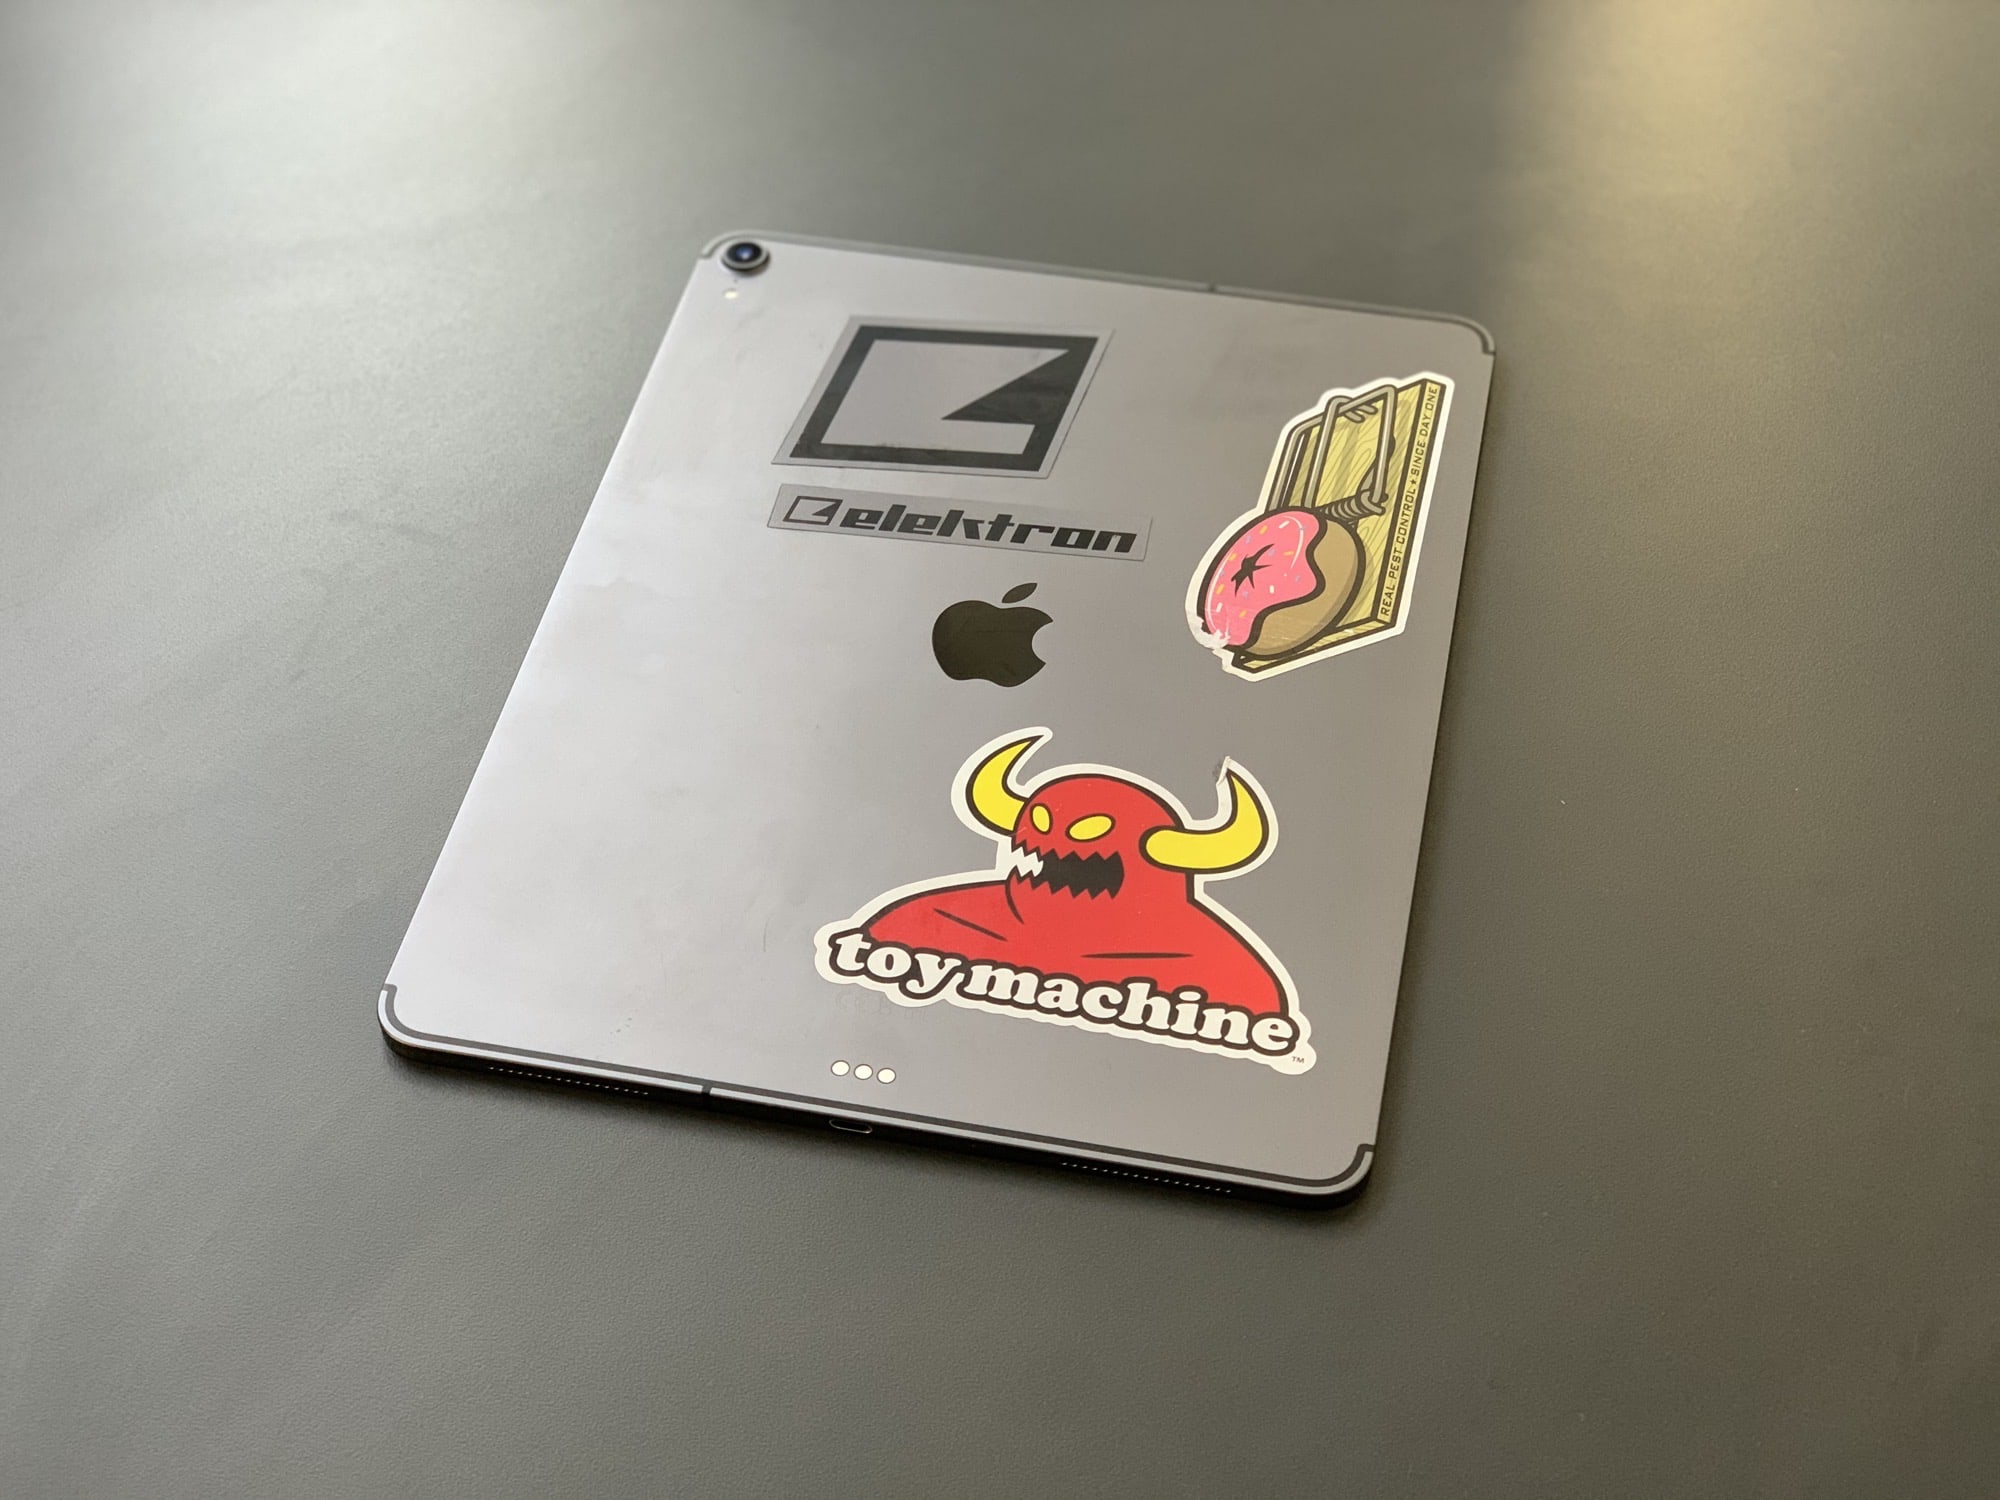 Want a MacBook sticker? Stick 'em up.